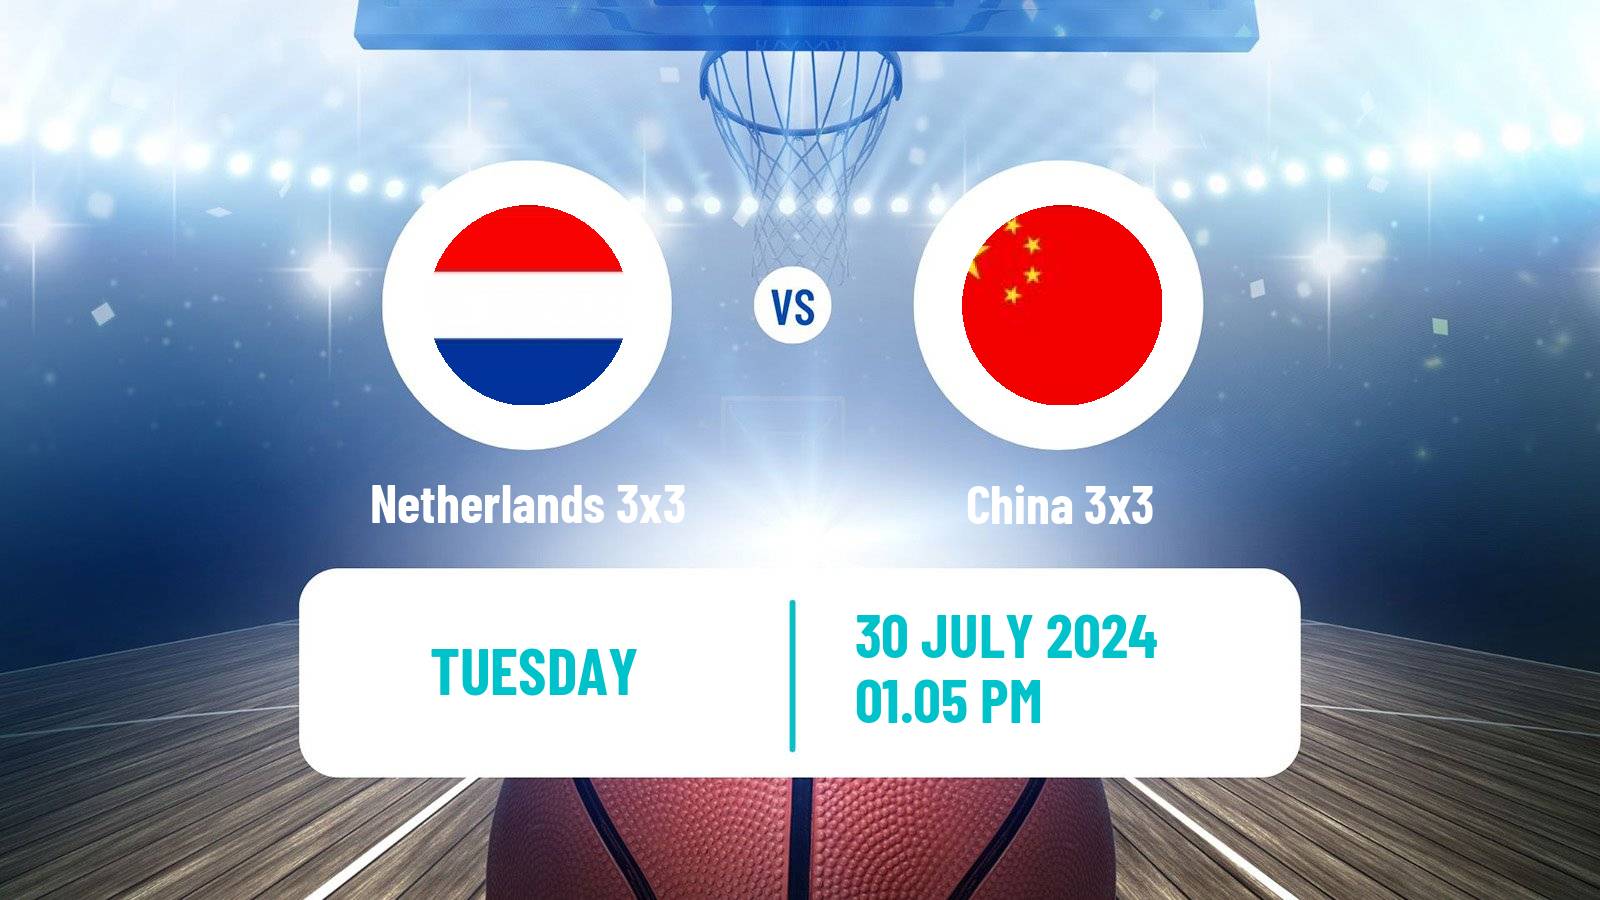 Basketball Olympic Games Basketball 3x3 Netherlands 3x3 - China 3x3